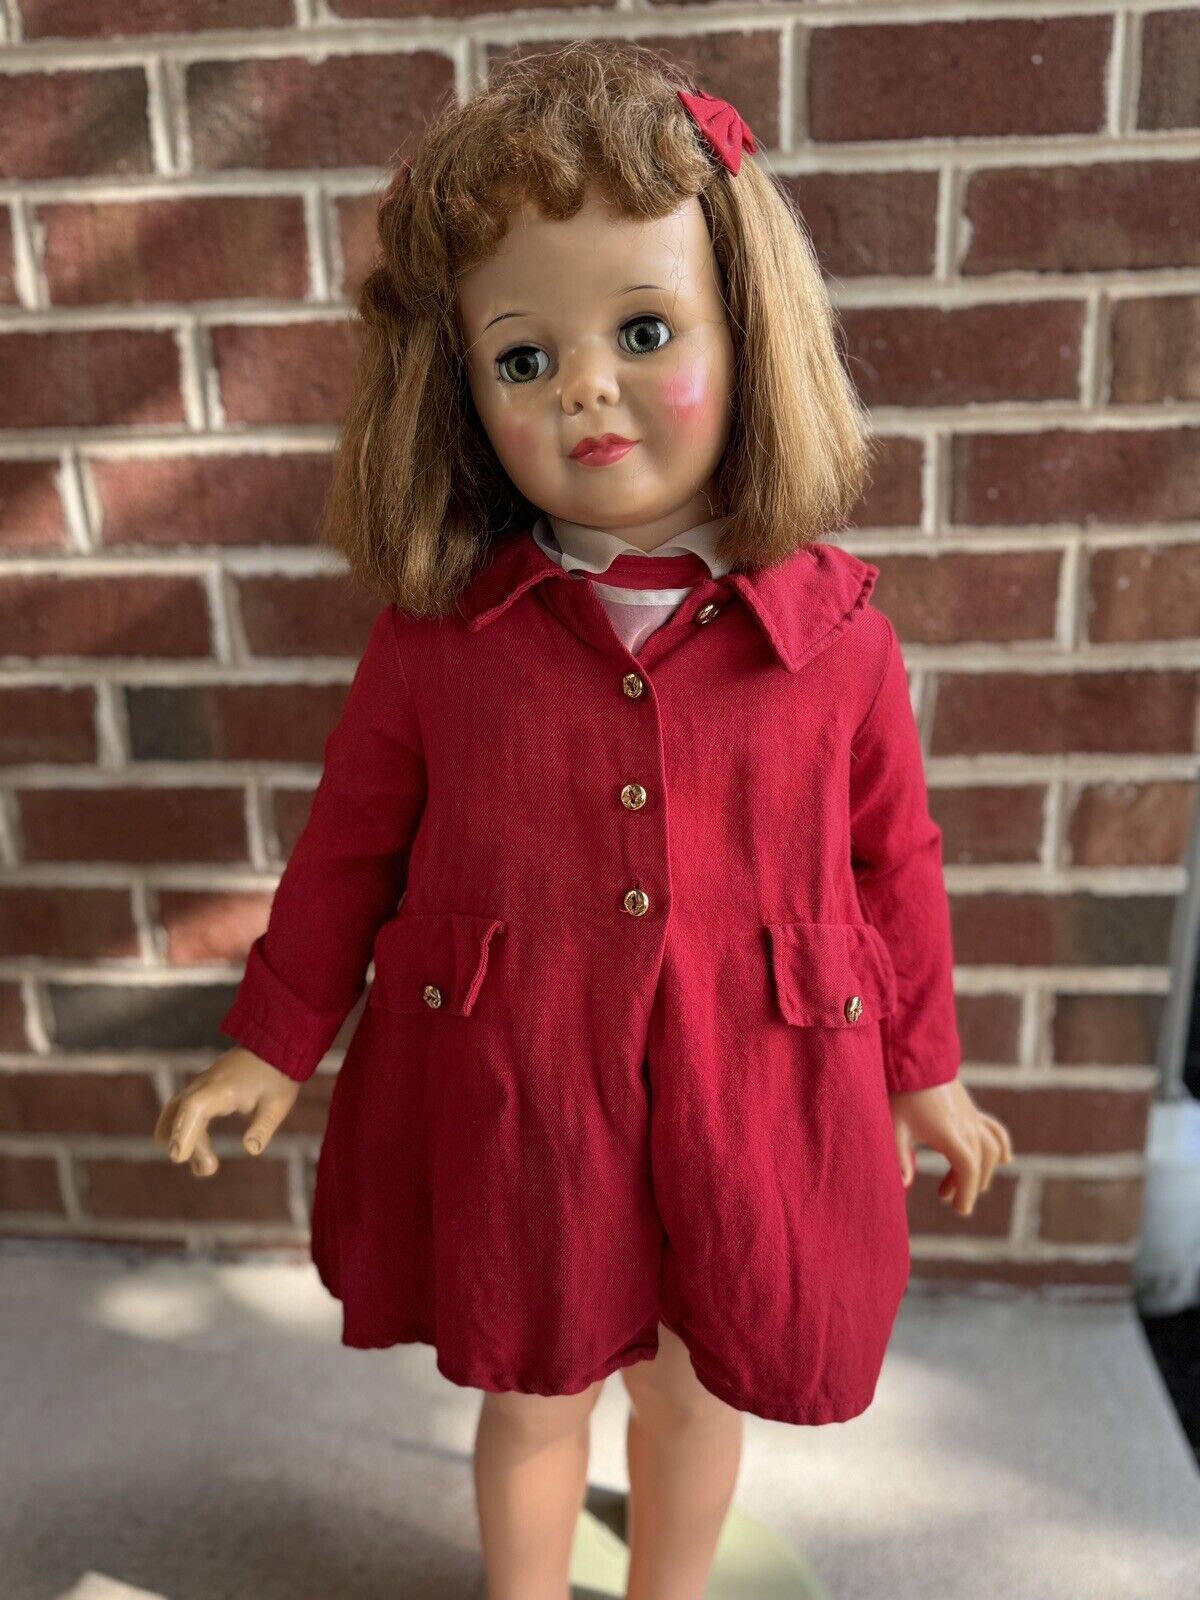 Vintage Ideal G-35 Patti Patty Playpal Doll Strawberry Blonde Red Coat Dress